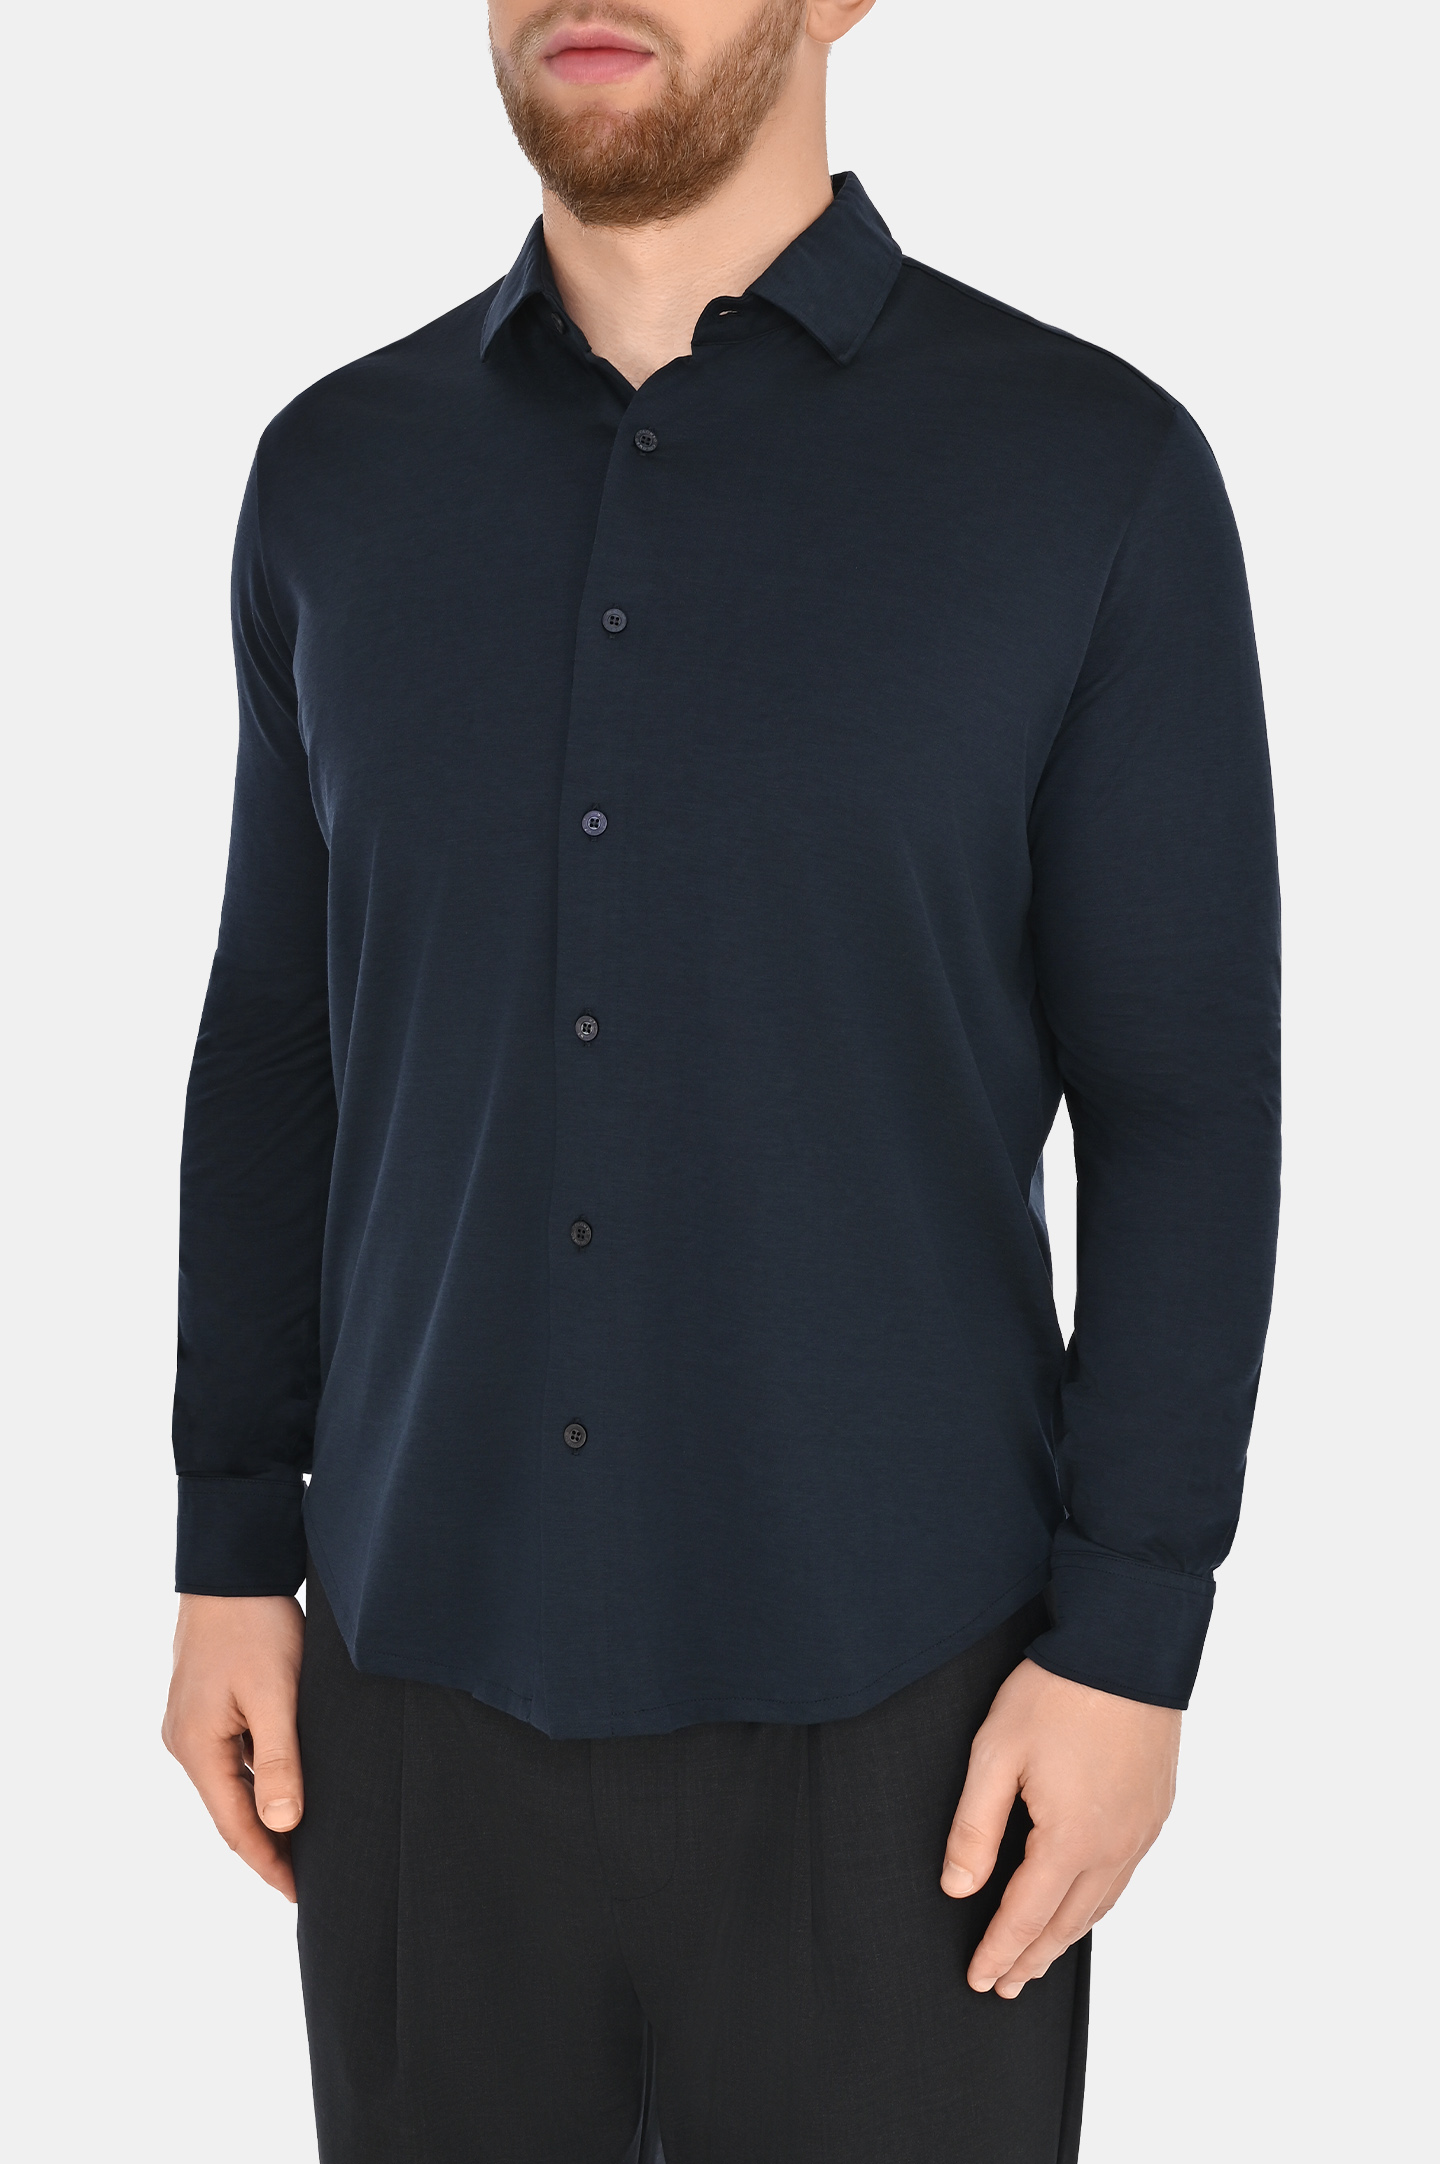 Рубашка из шелка и хлопка COLOMBO TS00382/-/A00897, цвет: Темно-синий, Мужской